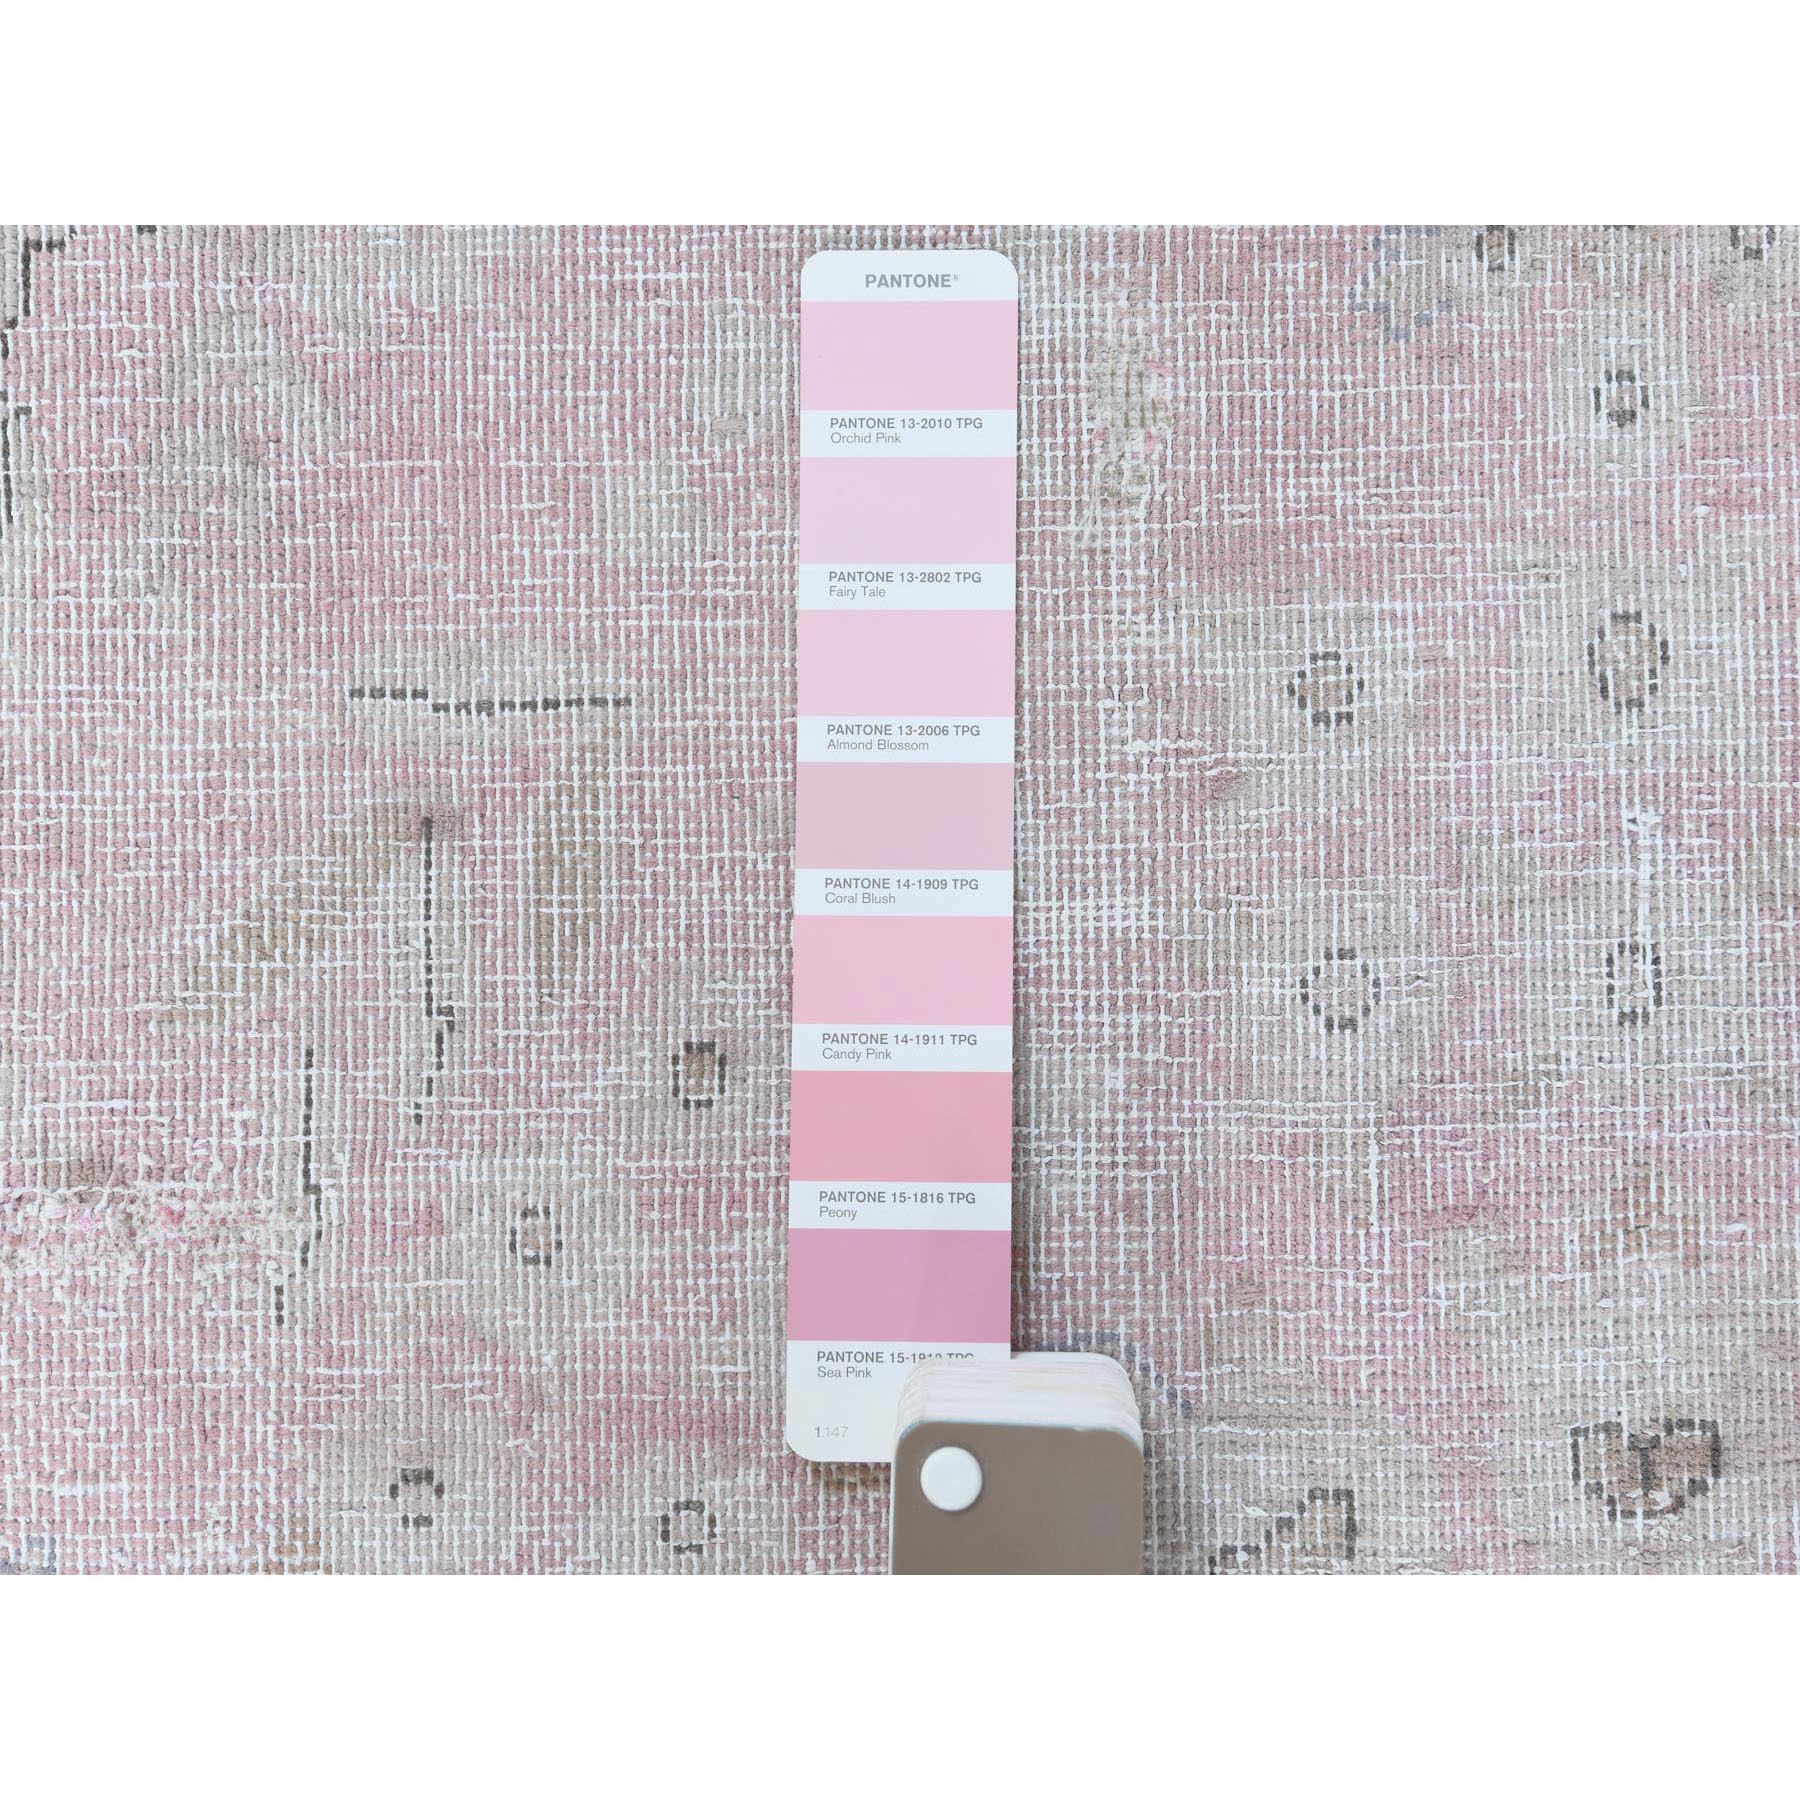 9'7"x15'2" Oversize Faded Vintage Light Pink Persian Kerman Organic Wool Worn Down Clean Distressed Hand Woven Oriental Rug 